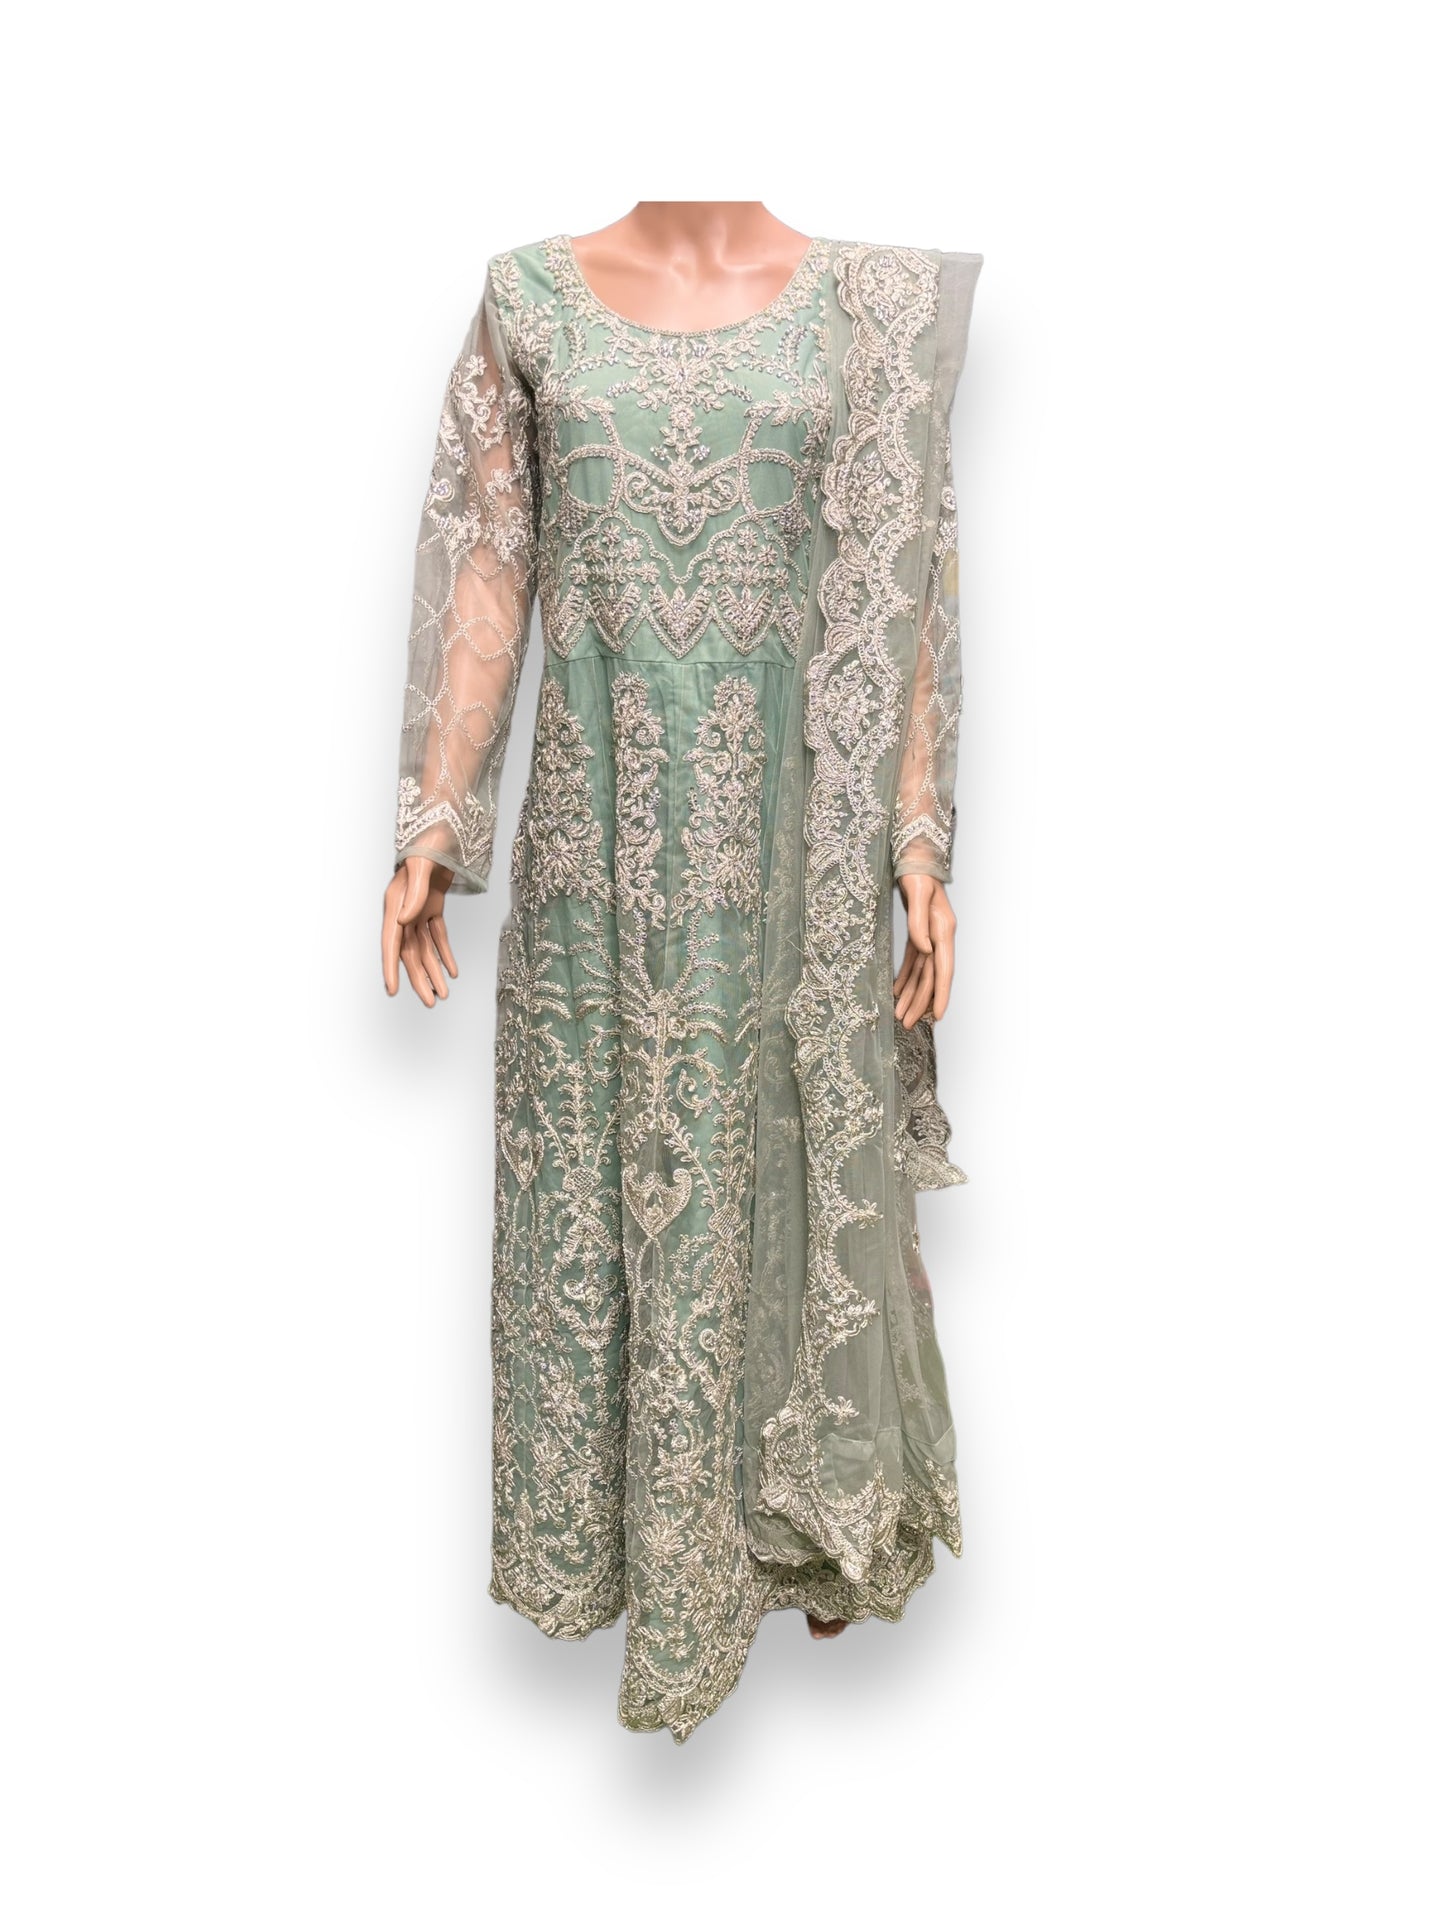 Sea Green Color Bridal Anarkali Gown